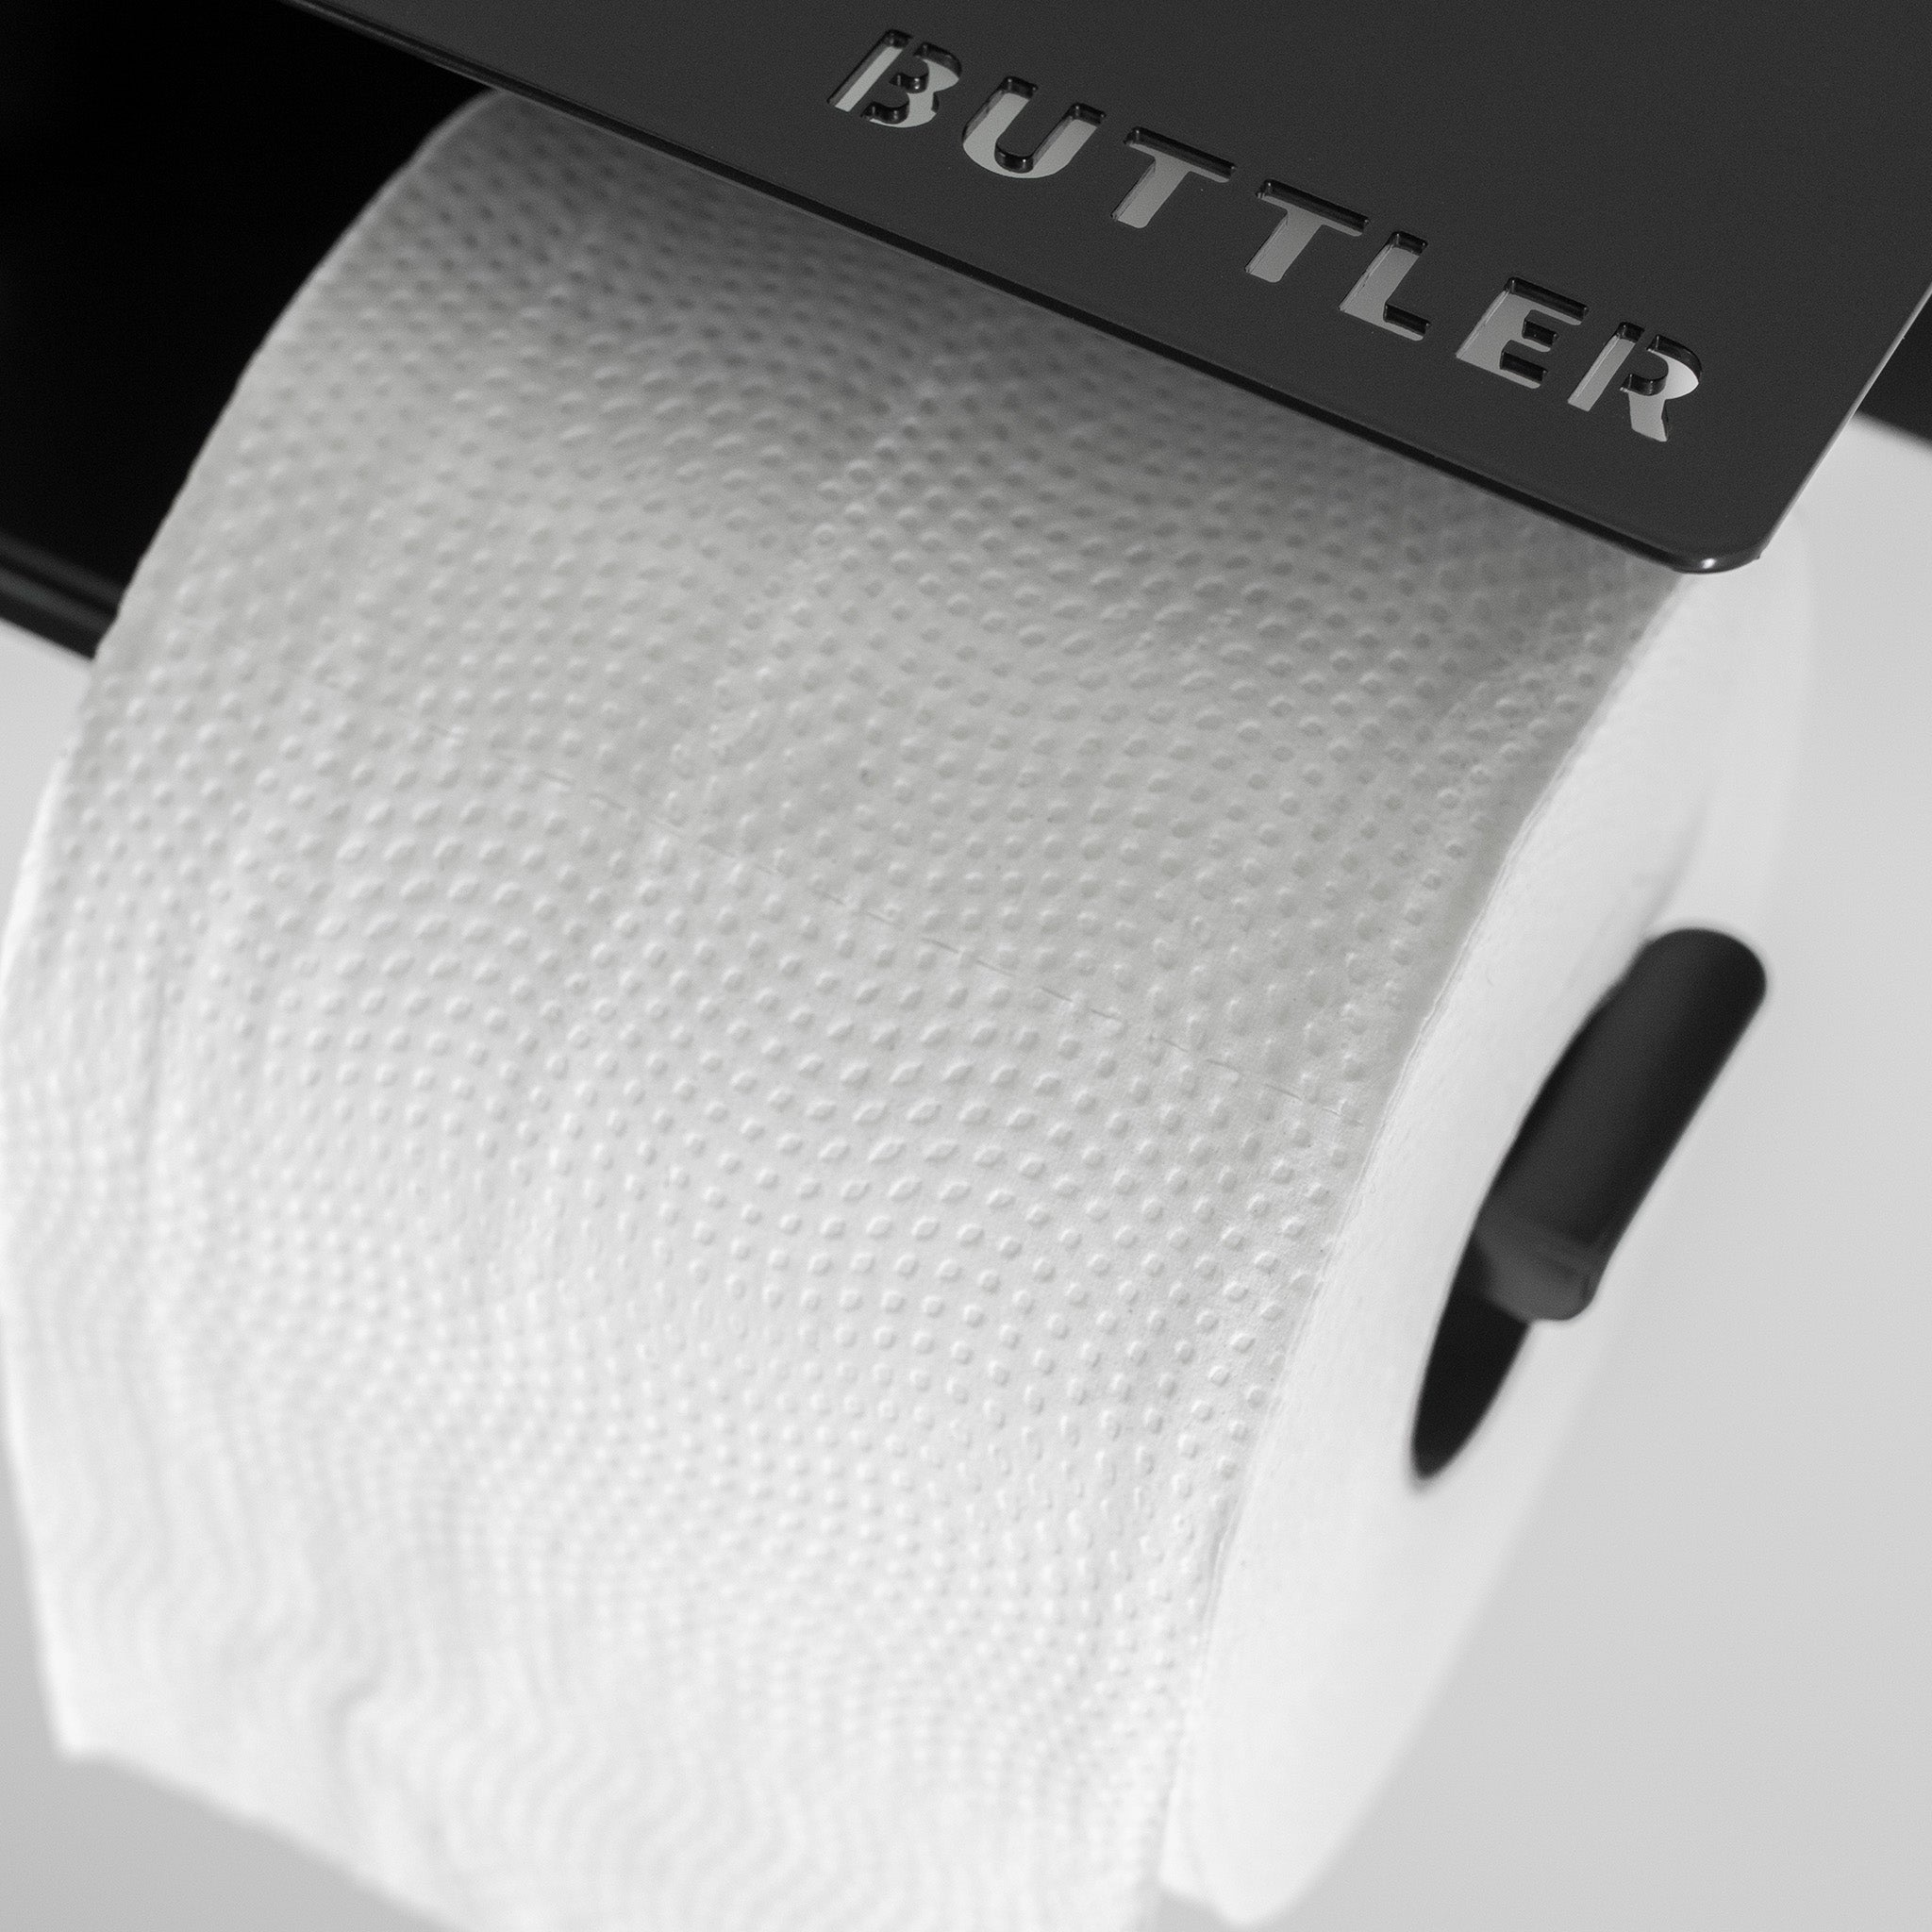 Toiletpapier spray met toiletrolhouder - Buttler.shop